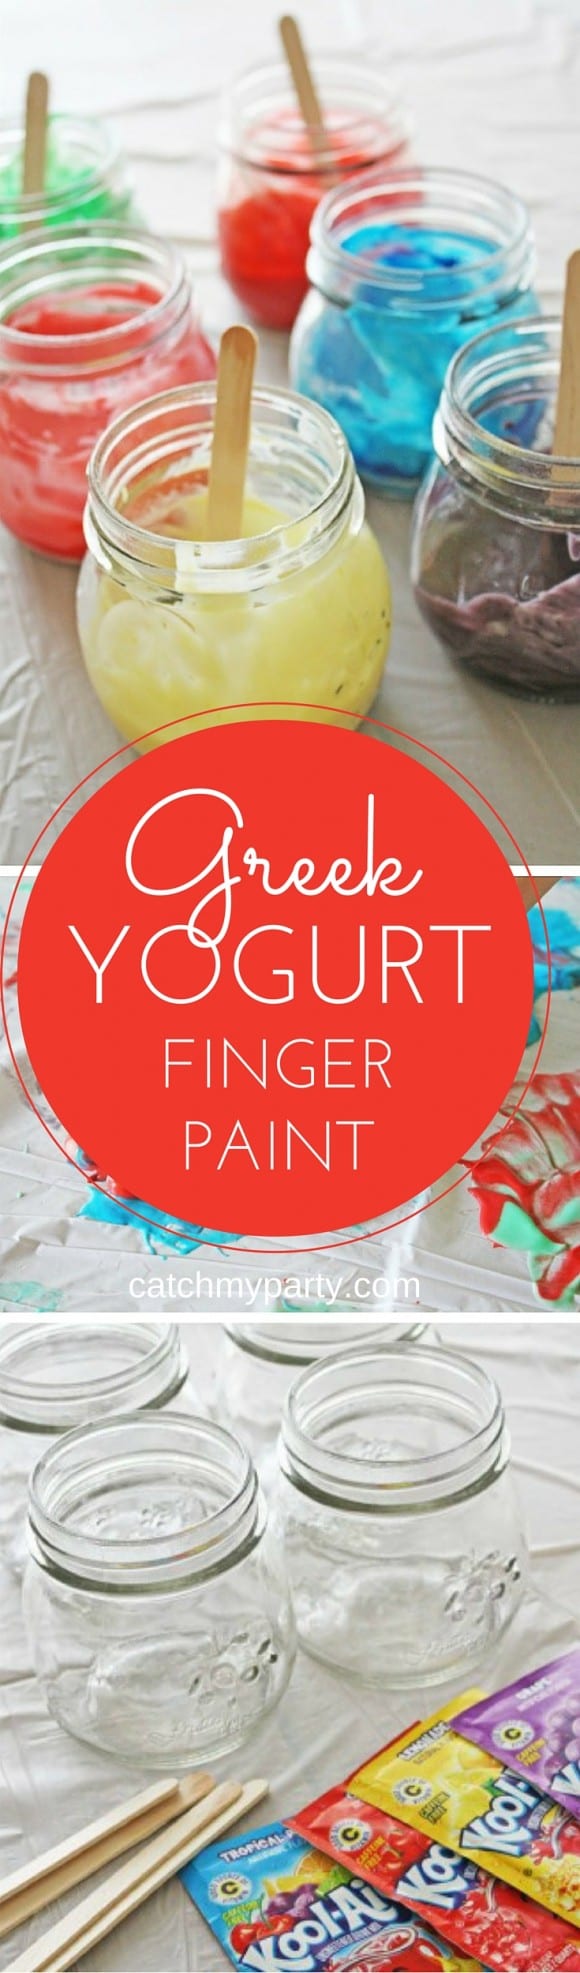 Greek Yogurt Finger Paint | CatchMyParty.com